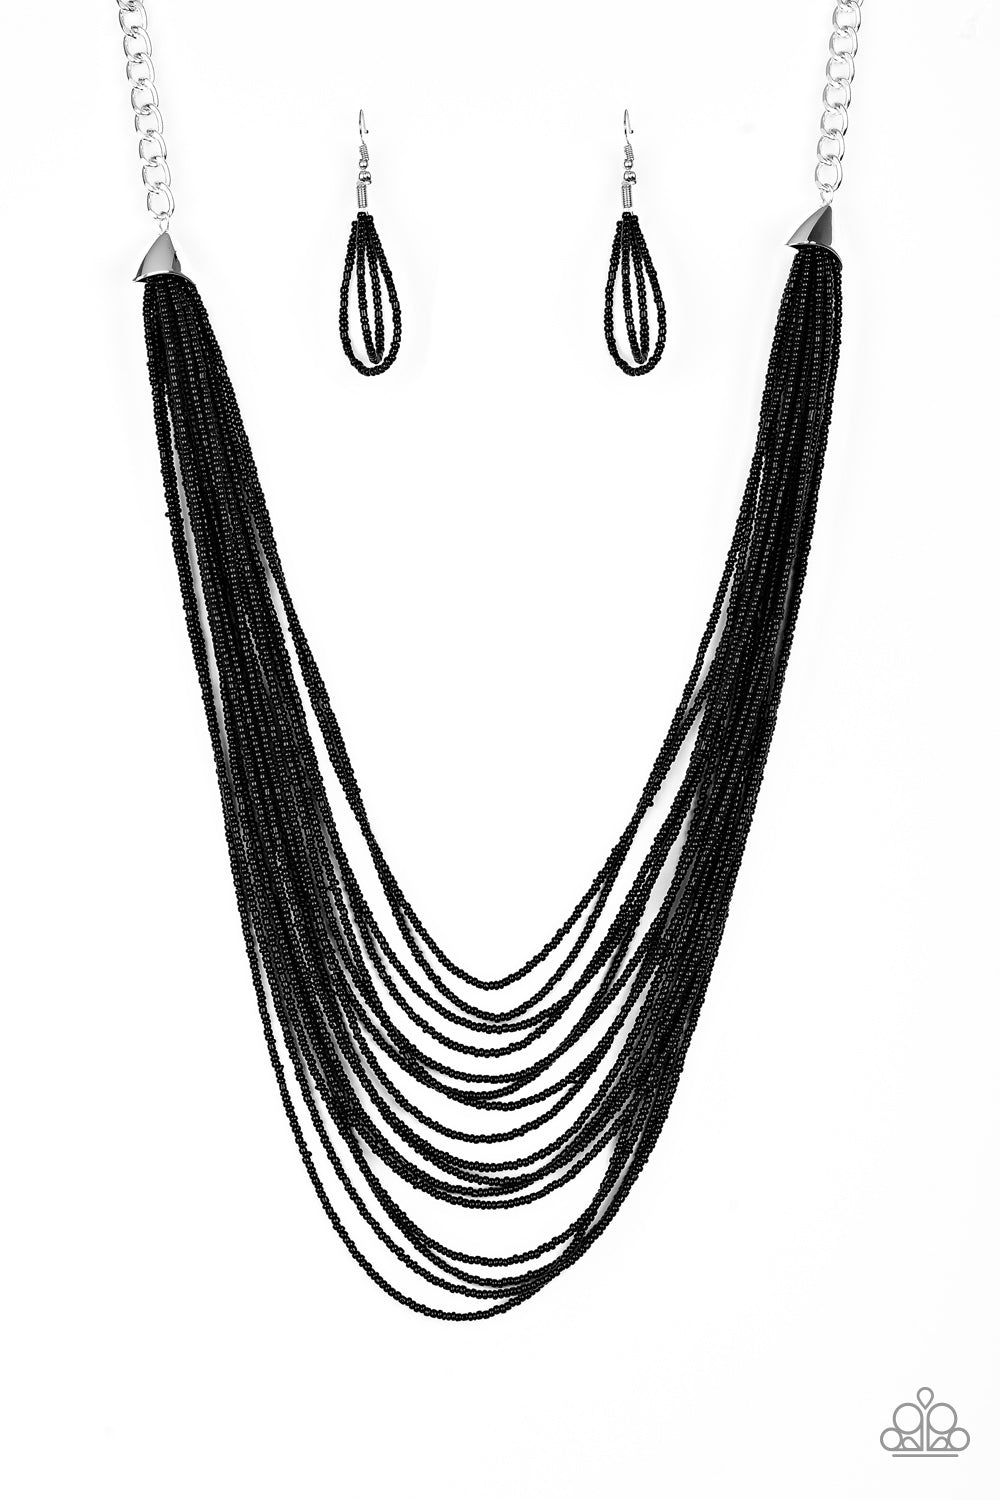 Peacefully Pacific Black
Necklace - Daria's Blings N Things